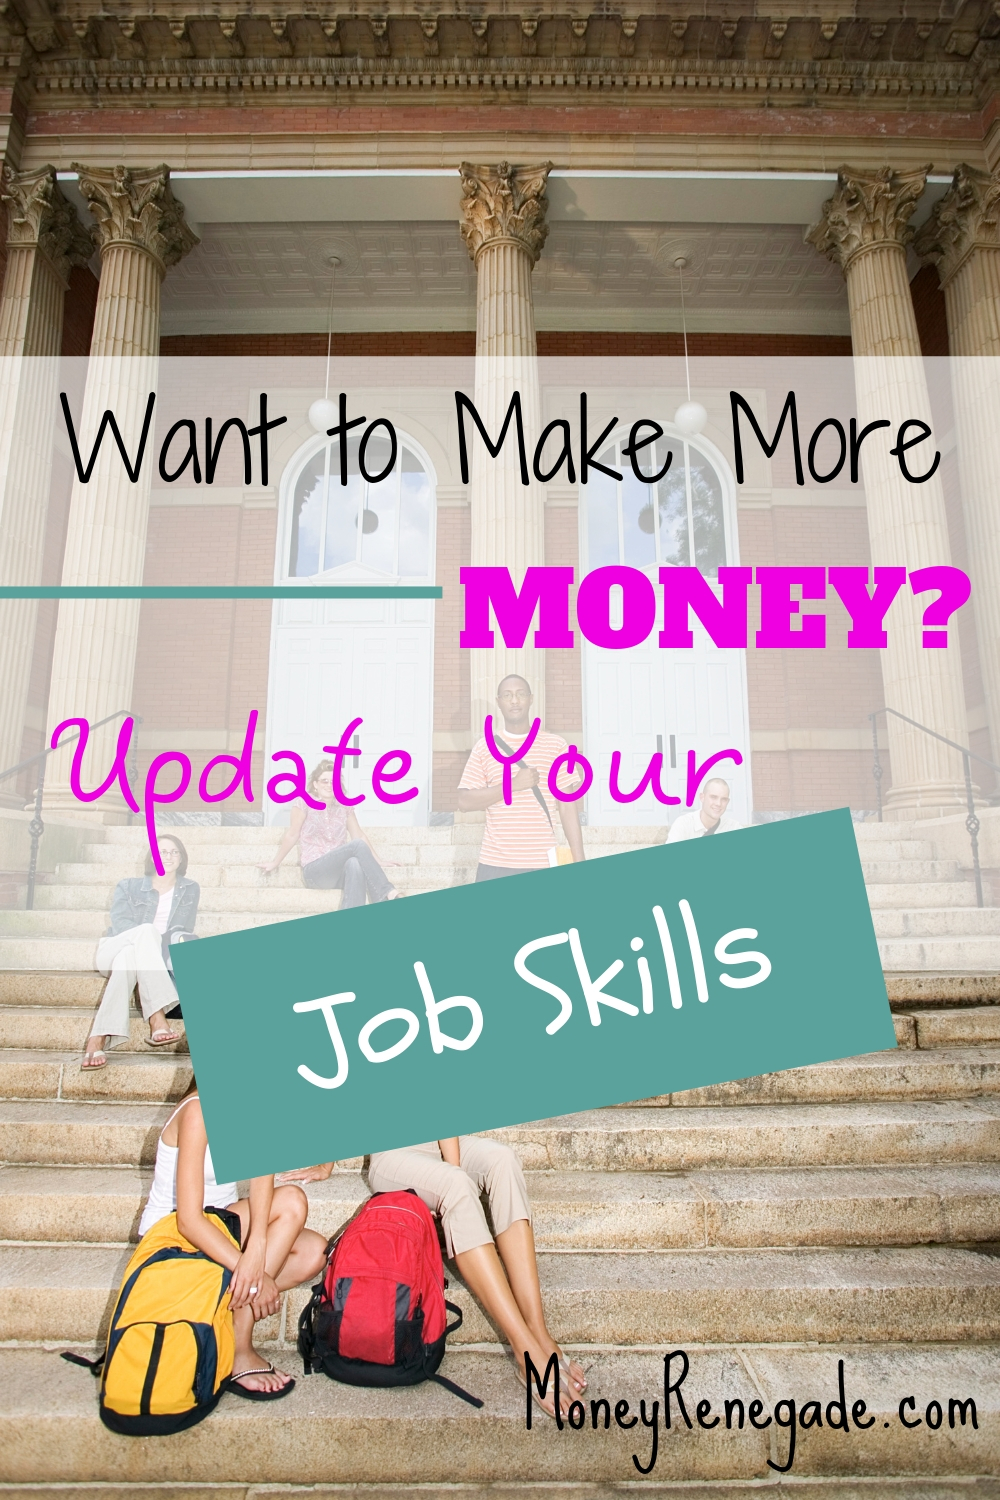 Get the job skills you need to make more money